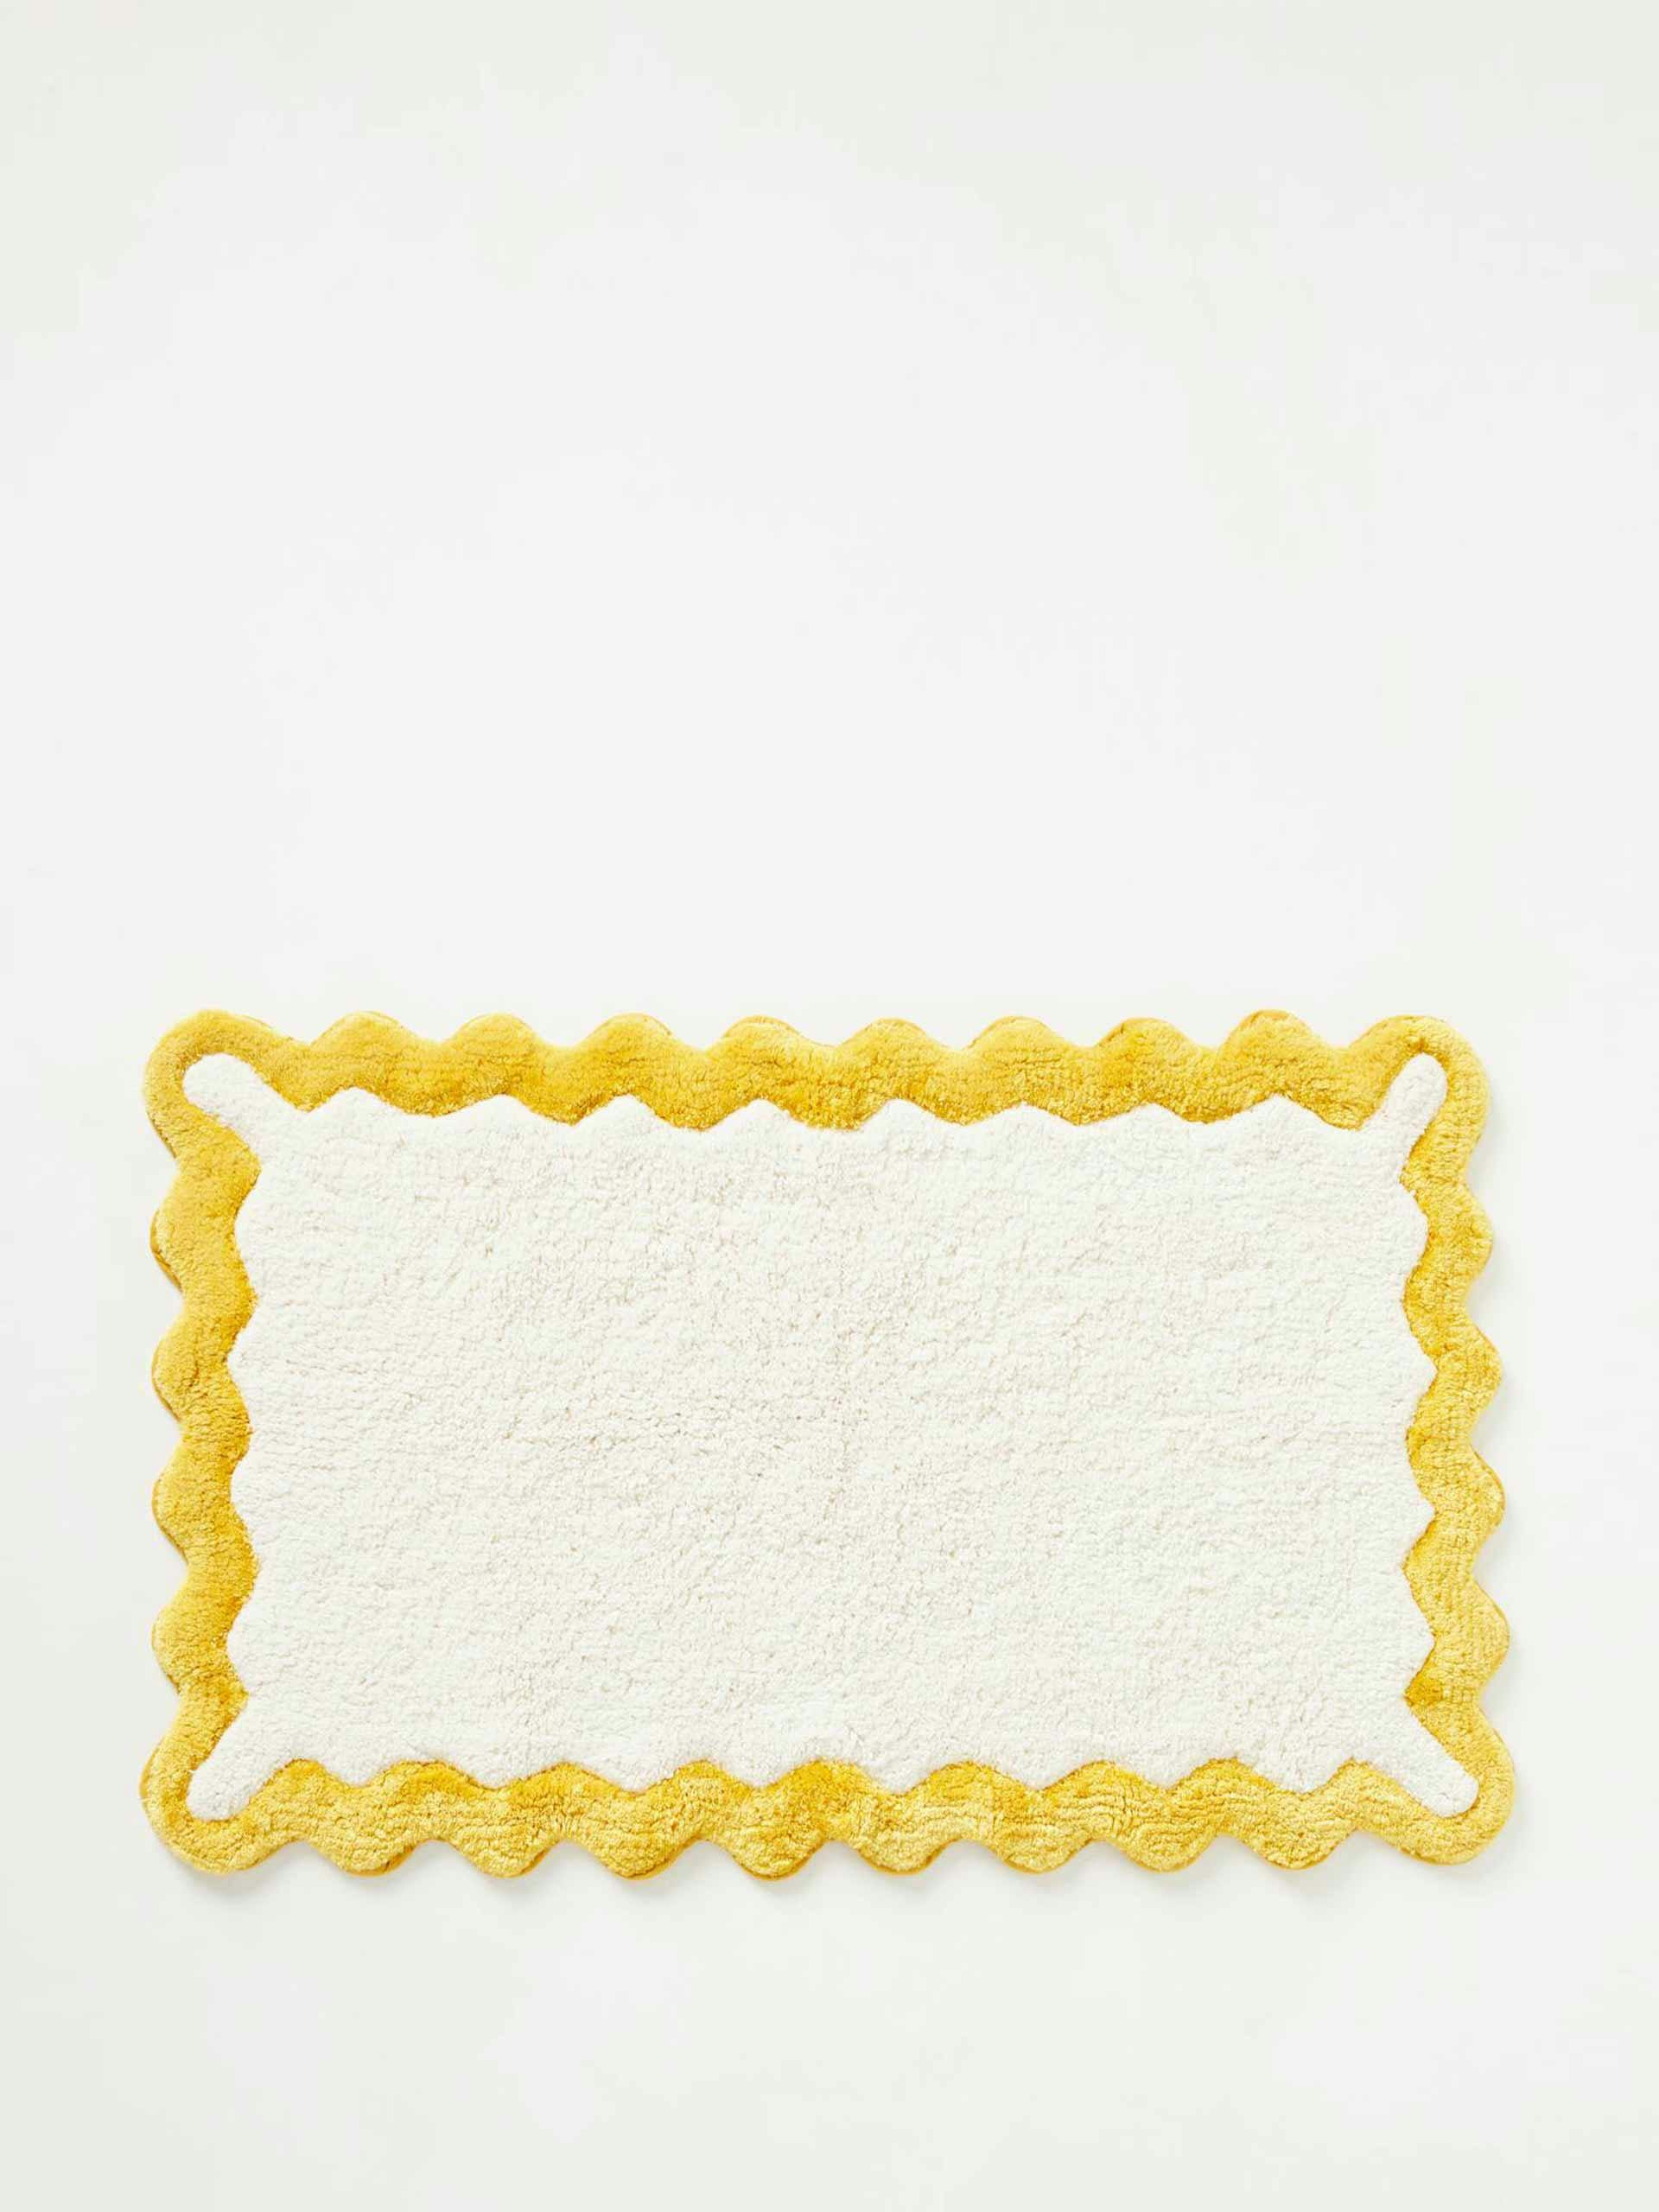 White and yellow bath mat